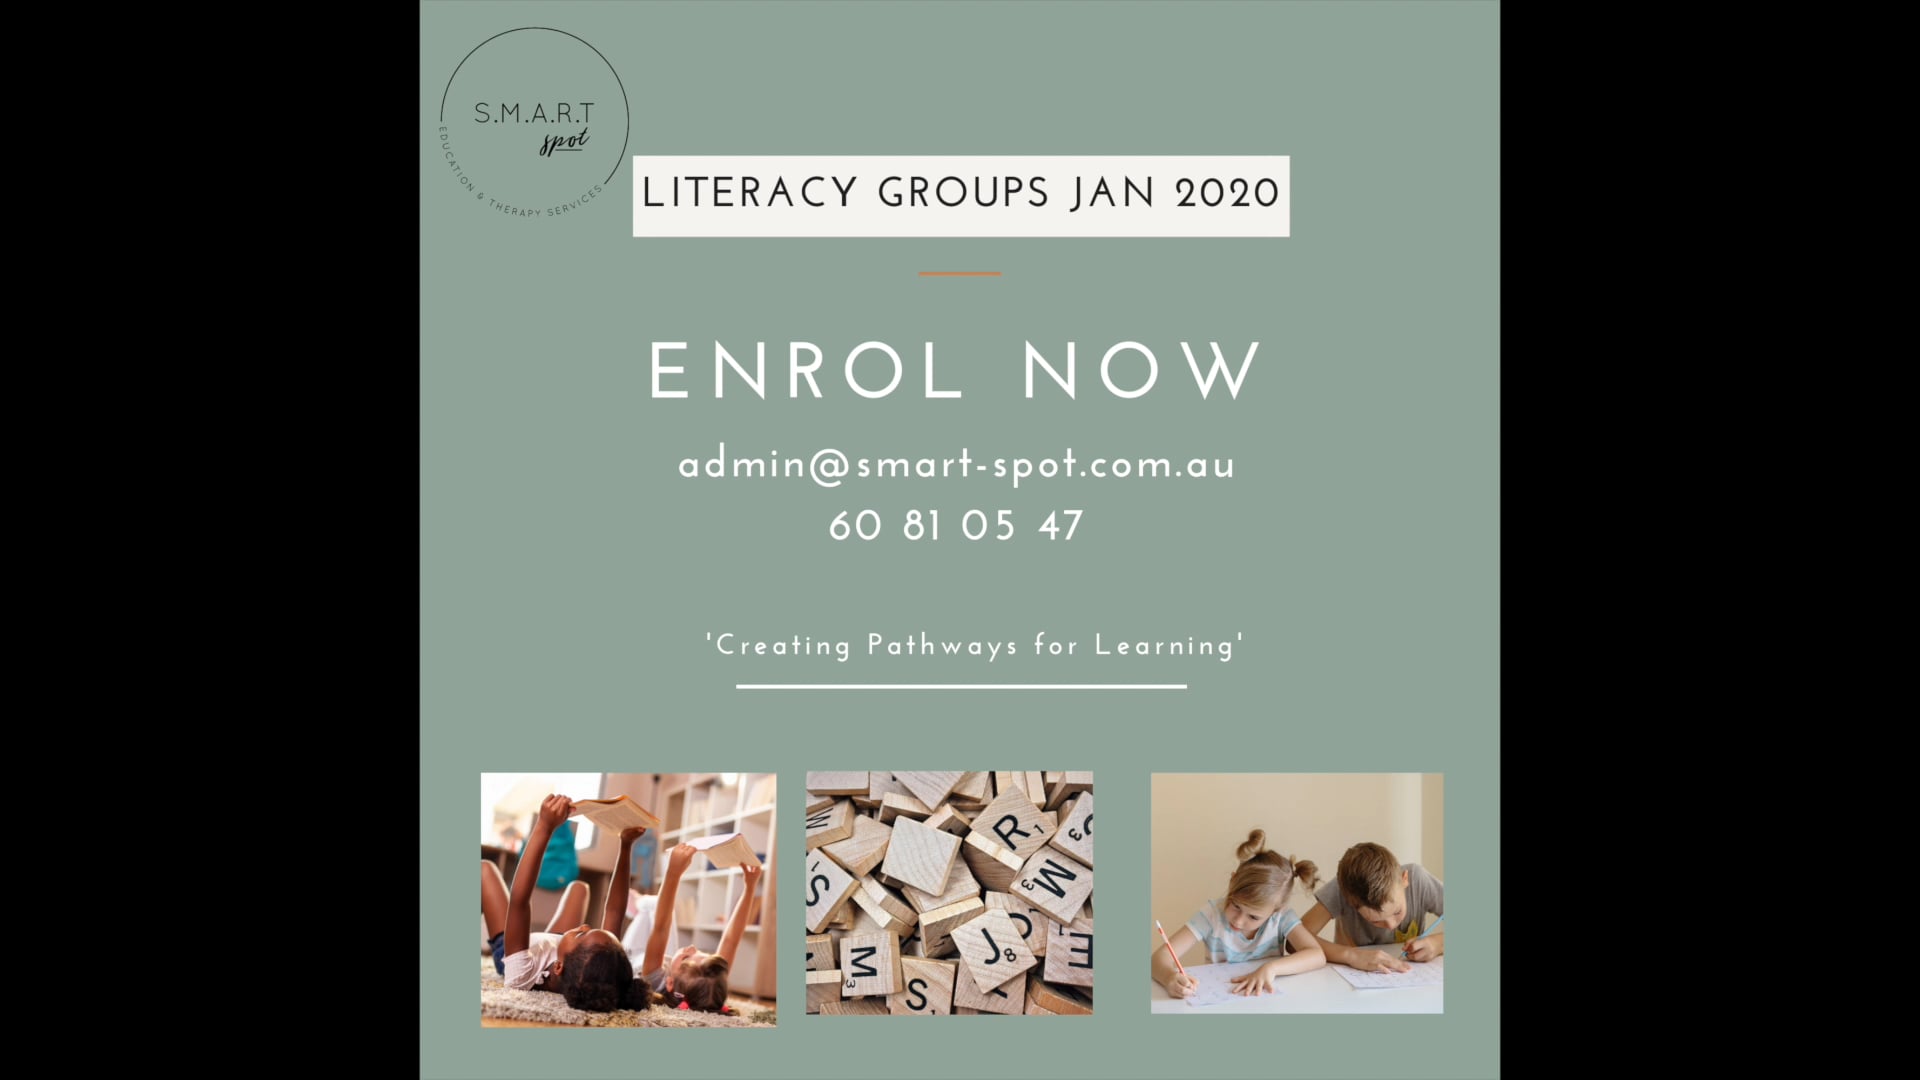 Literacy Groups - January 2020 @ Smart-Spot